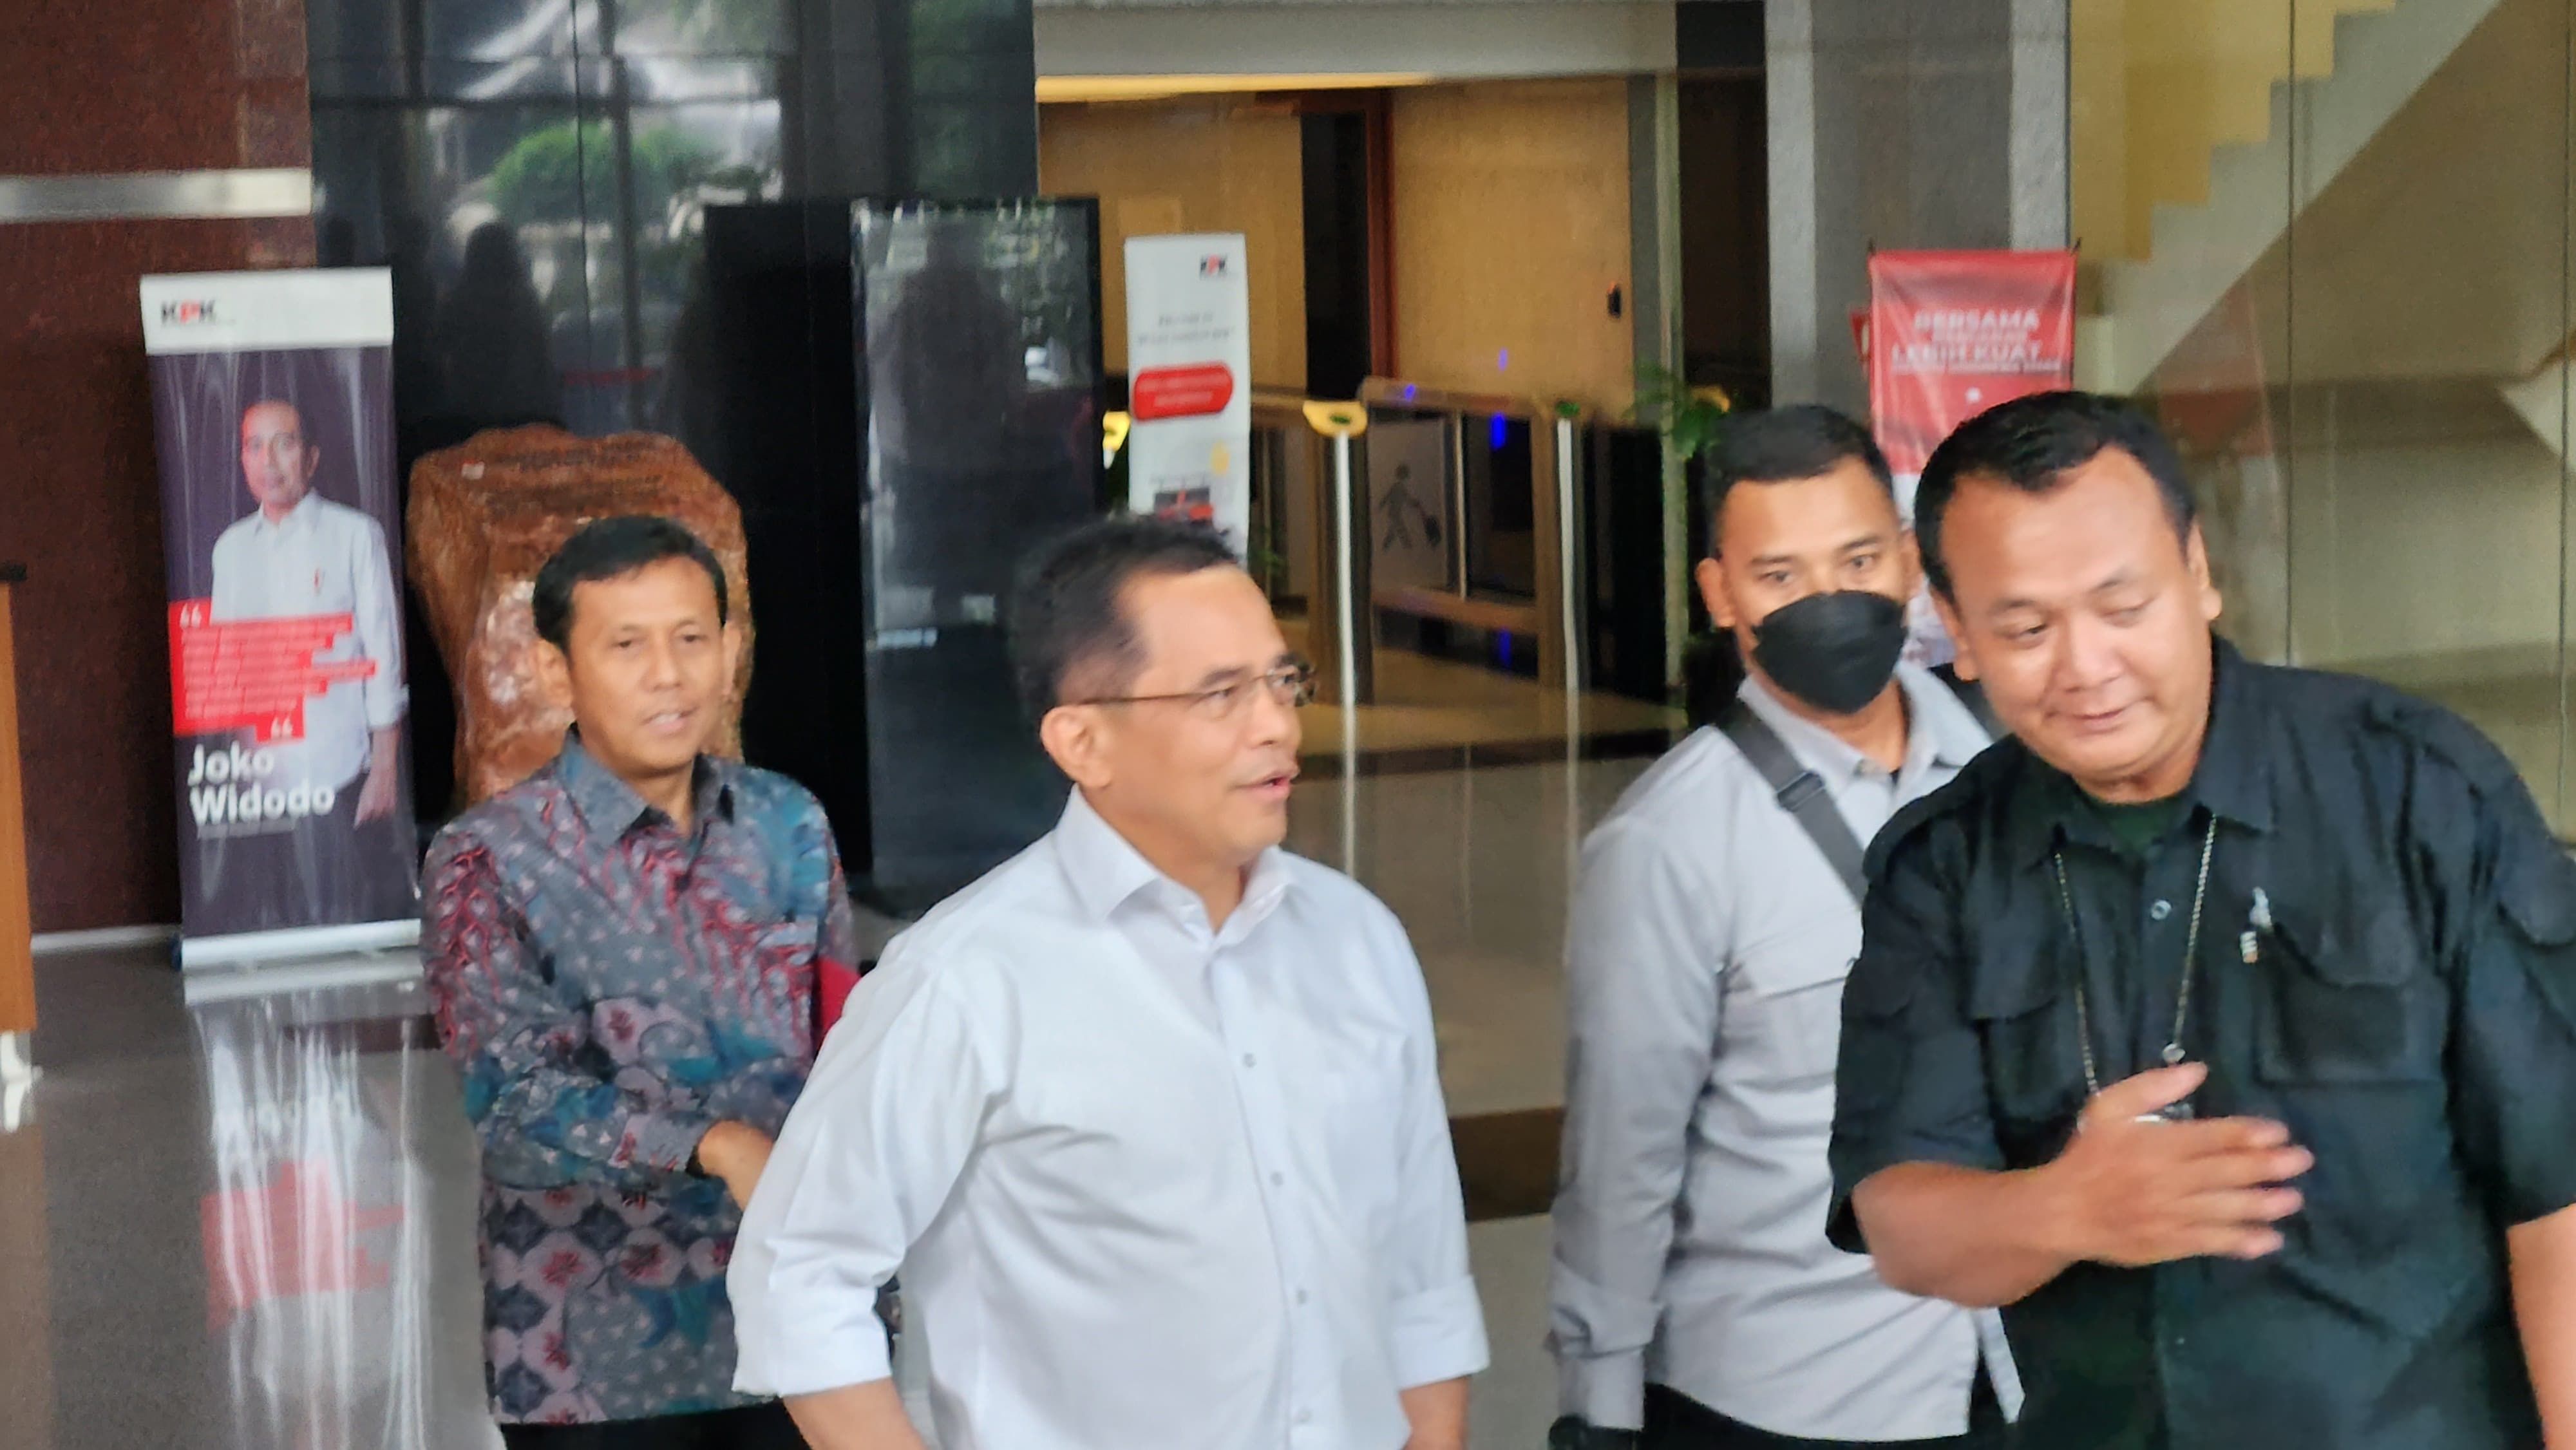 Dugaan Korupsi Kelengkapan Rumdin, Sekjen DPR Mengaku Sudah Sampaikan Semuanya ke Penyidik